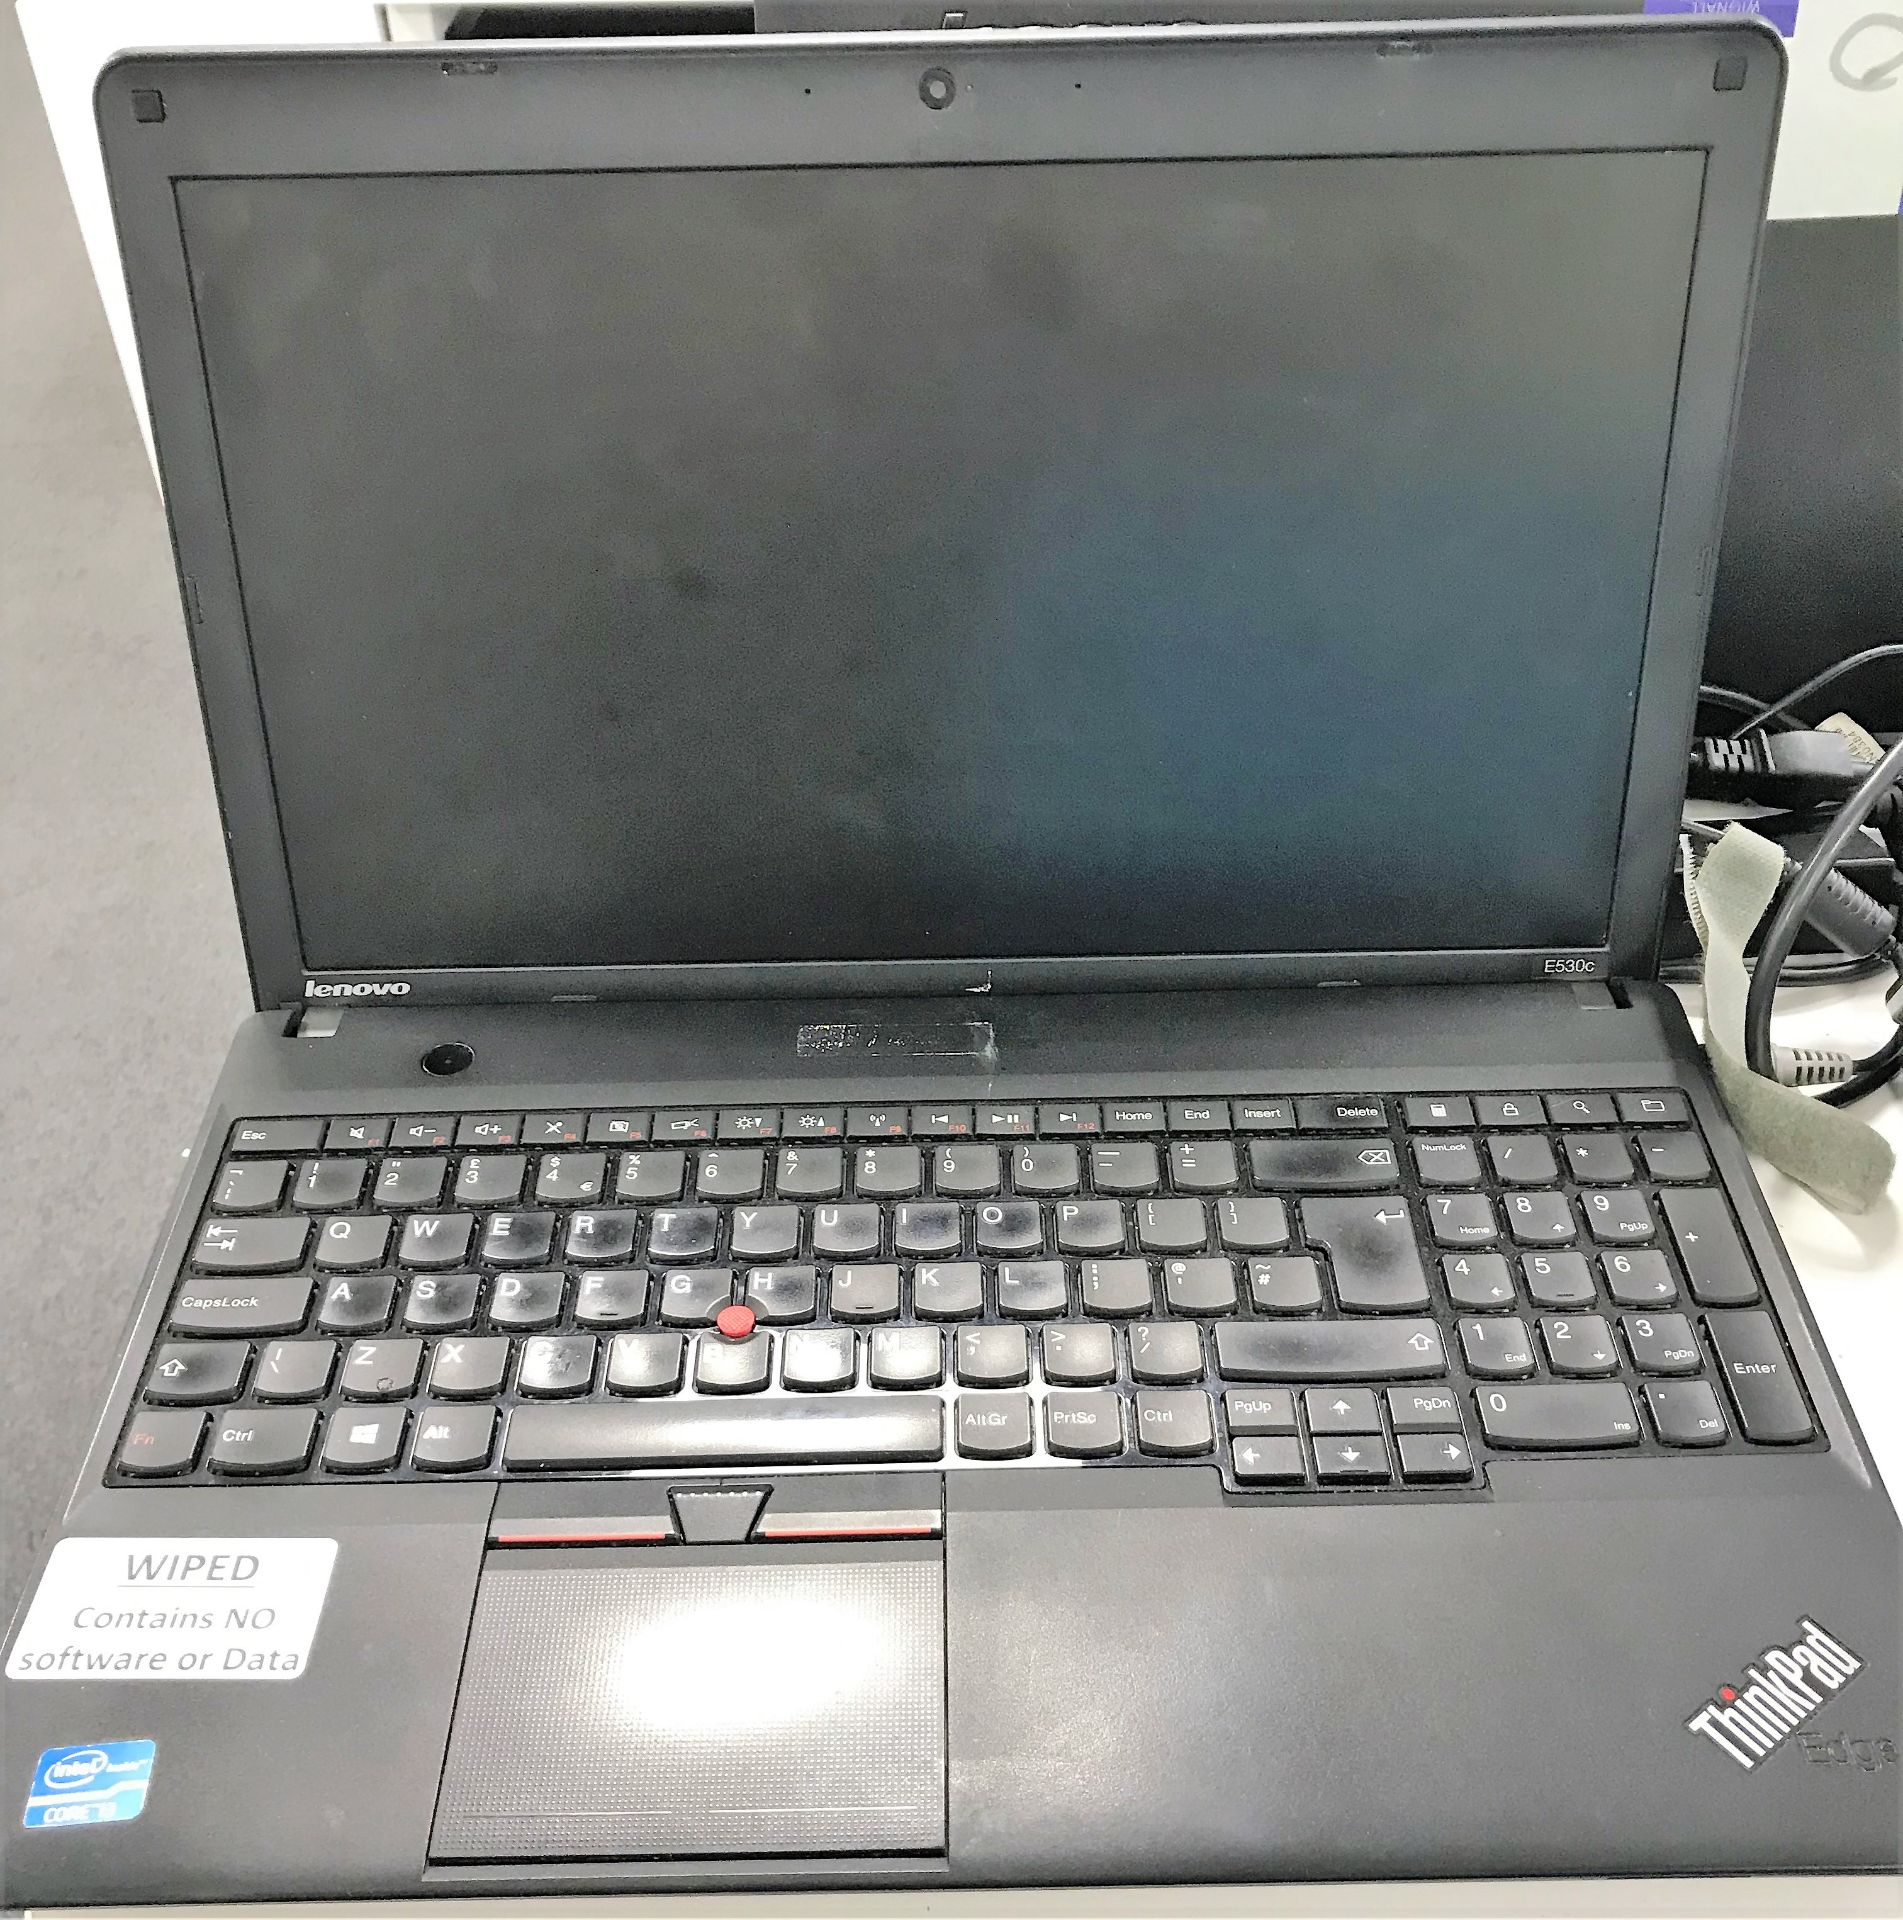 A Lenovo ThinkPad Edge E530c Lap Top Computer i3 3110M 2.4GHz 4GB RAM 500GB HDD (ID.00951).